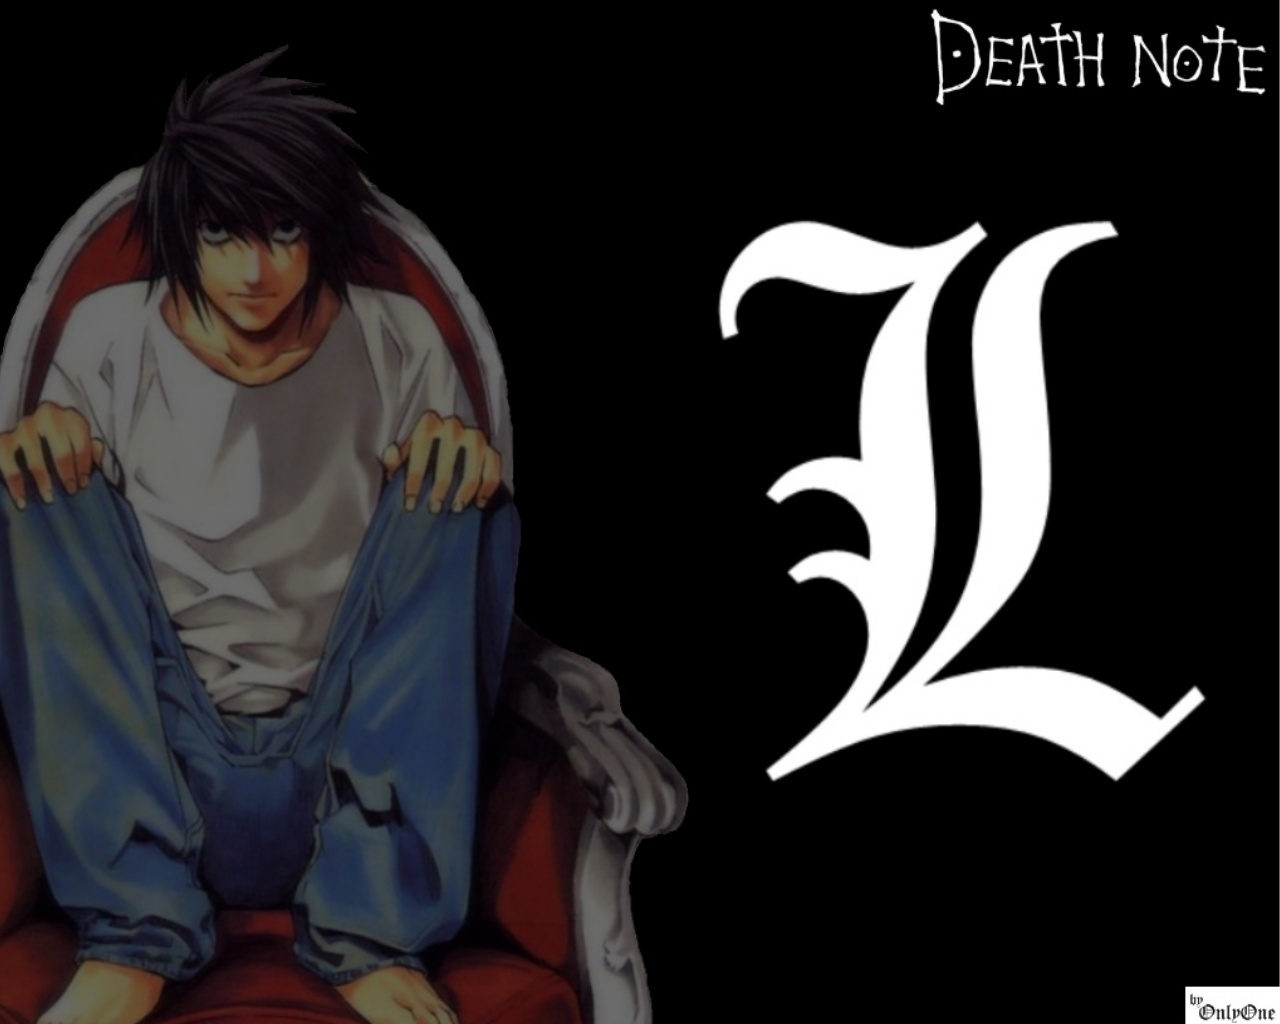 Death Note - death note fondo de pantalla (16487403) - fanpop